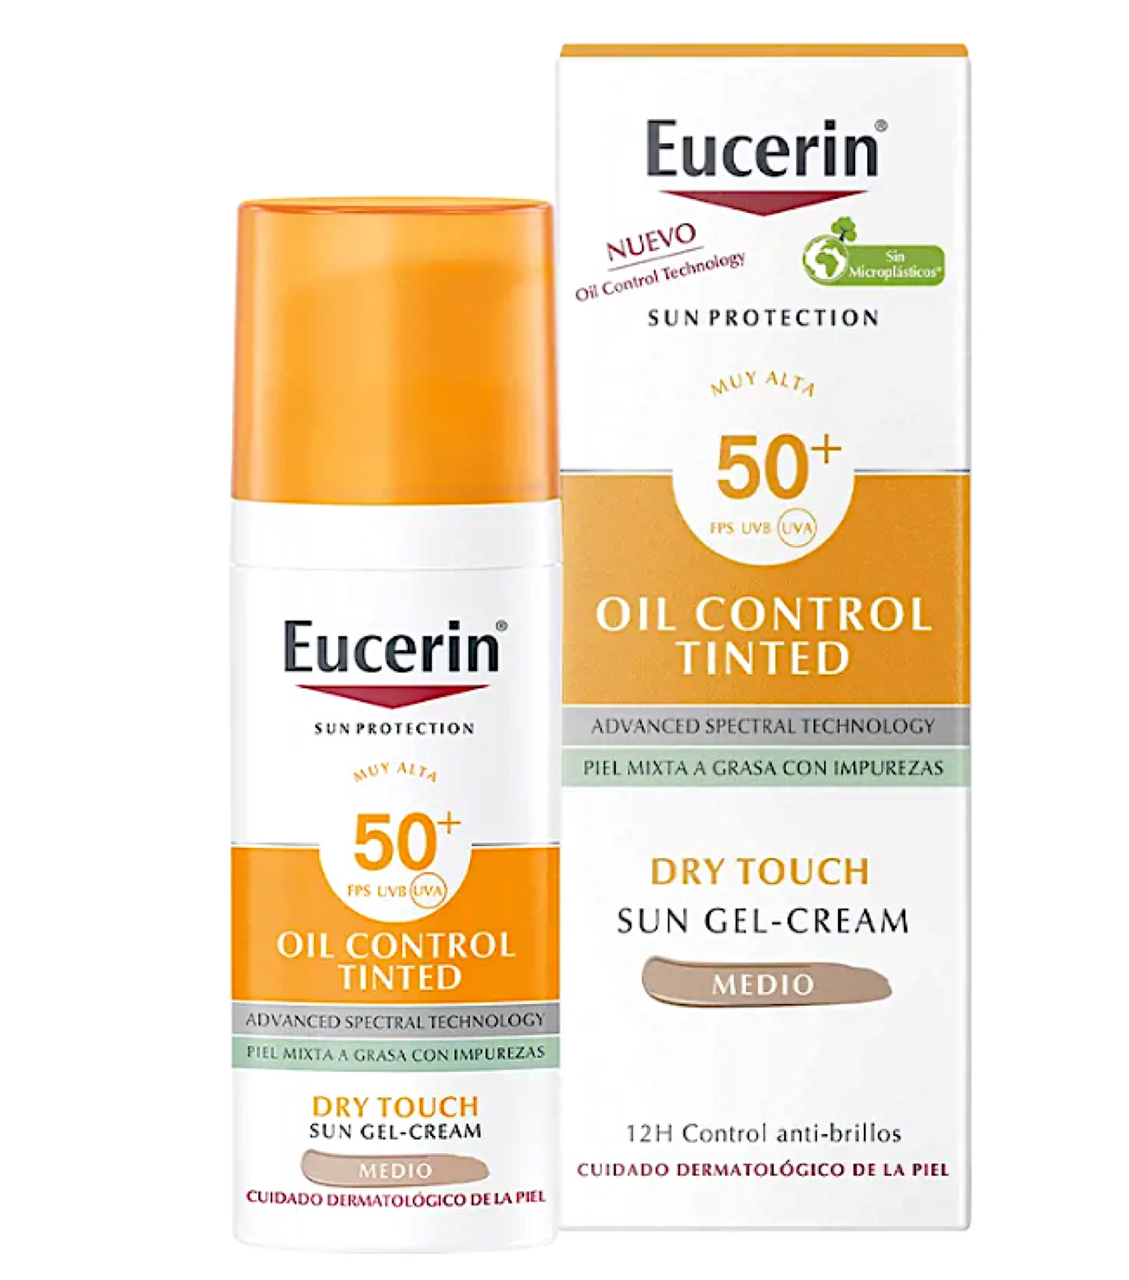 Eucerin Face Sunscreen Photoaging Control Tinted Anti-Age